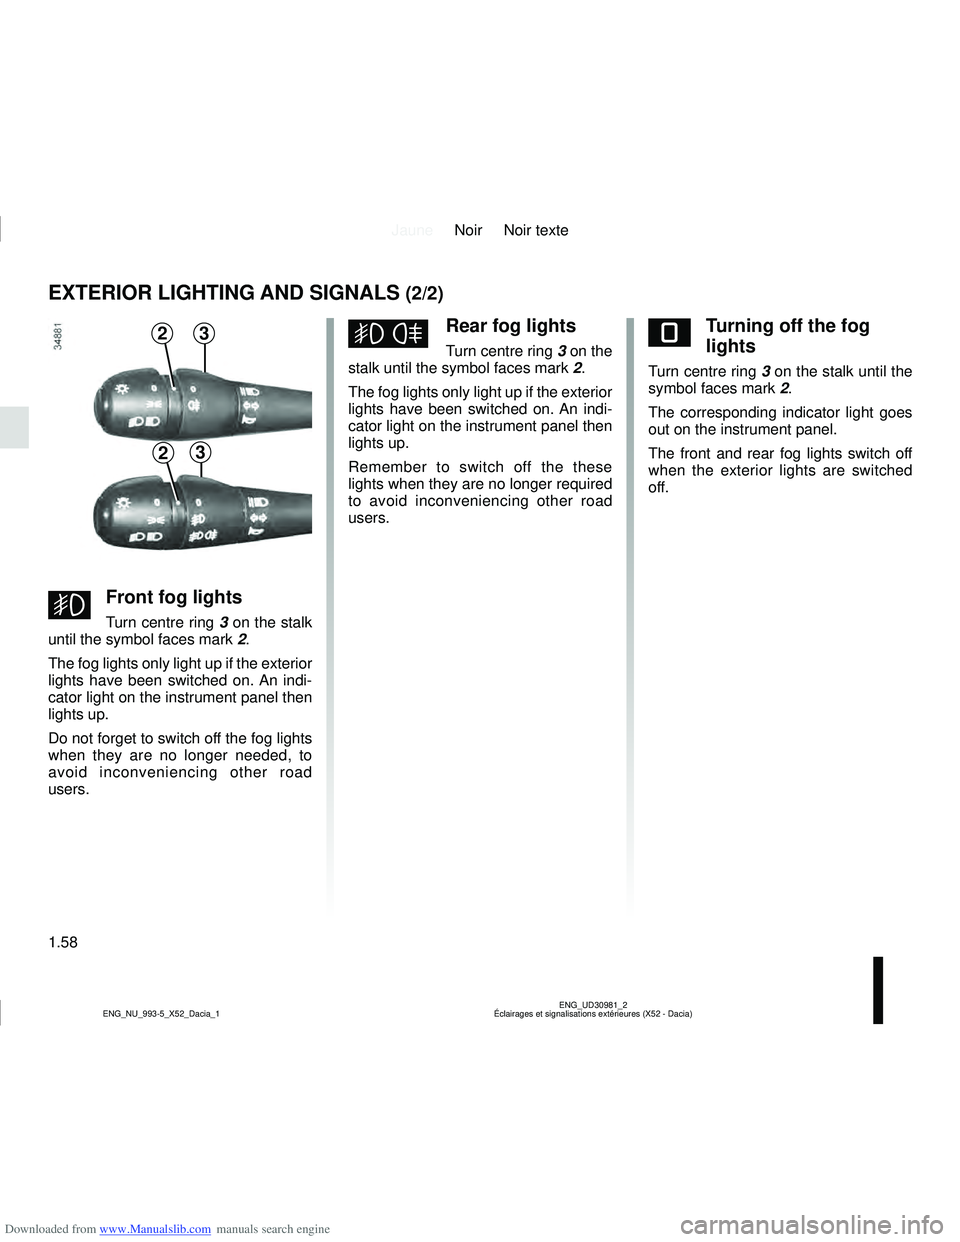 DACIA LOGAN 2014  Owners Manual Downloaded from www.Manualslib.com manuals search engine JauneNoir Noir texte
1.58
ENG_UD30981_2
Éclairages et signalisations extérieures (X52 - Dacia)
ENG_NU_993-5_X52_Dacia_1
EXTERIOR LIGHTING AND